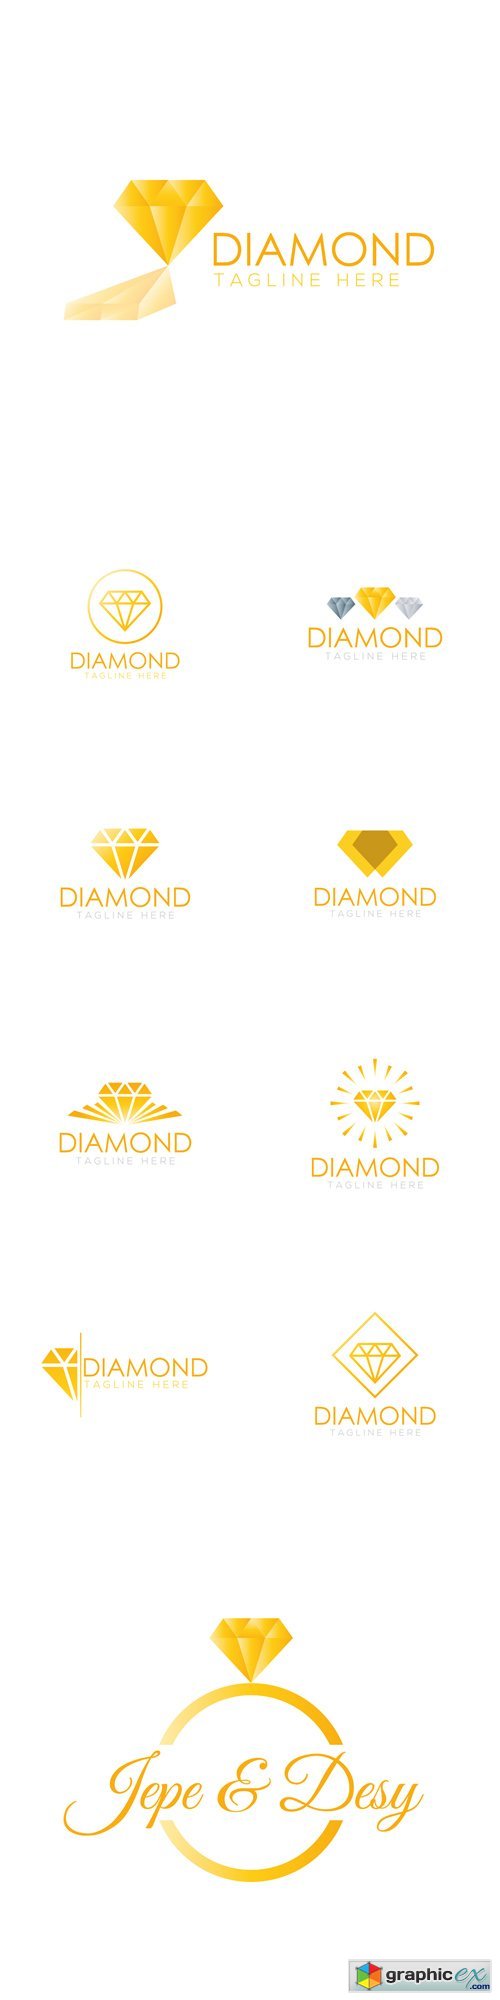 Diamond Logo Creative Design